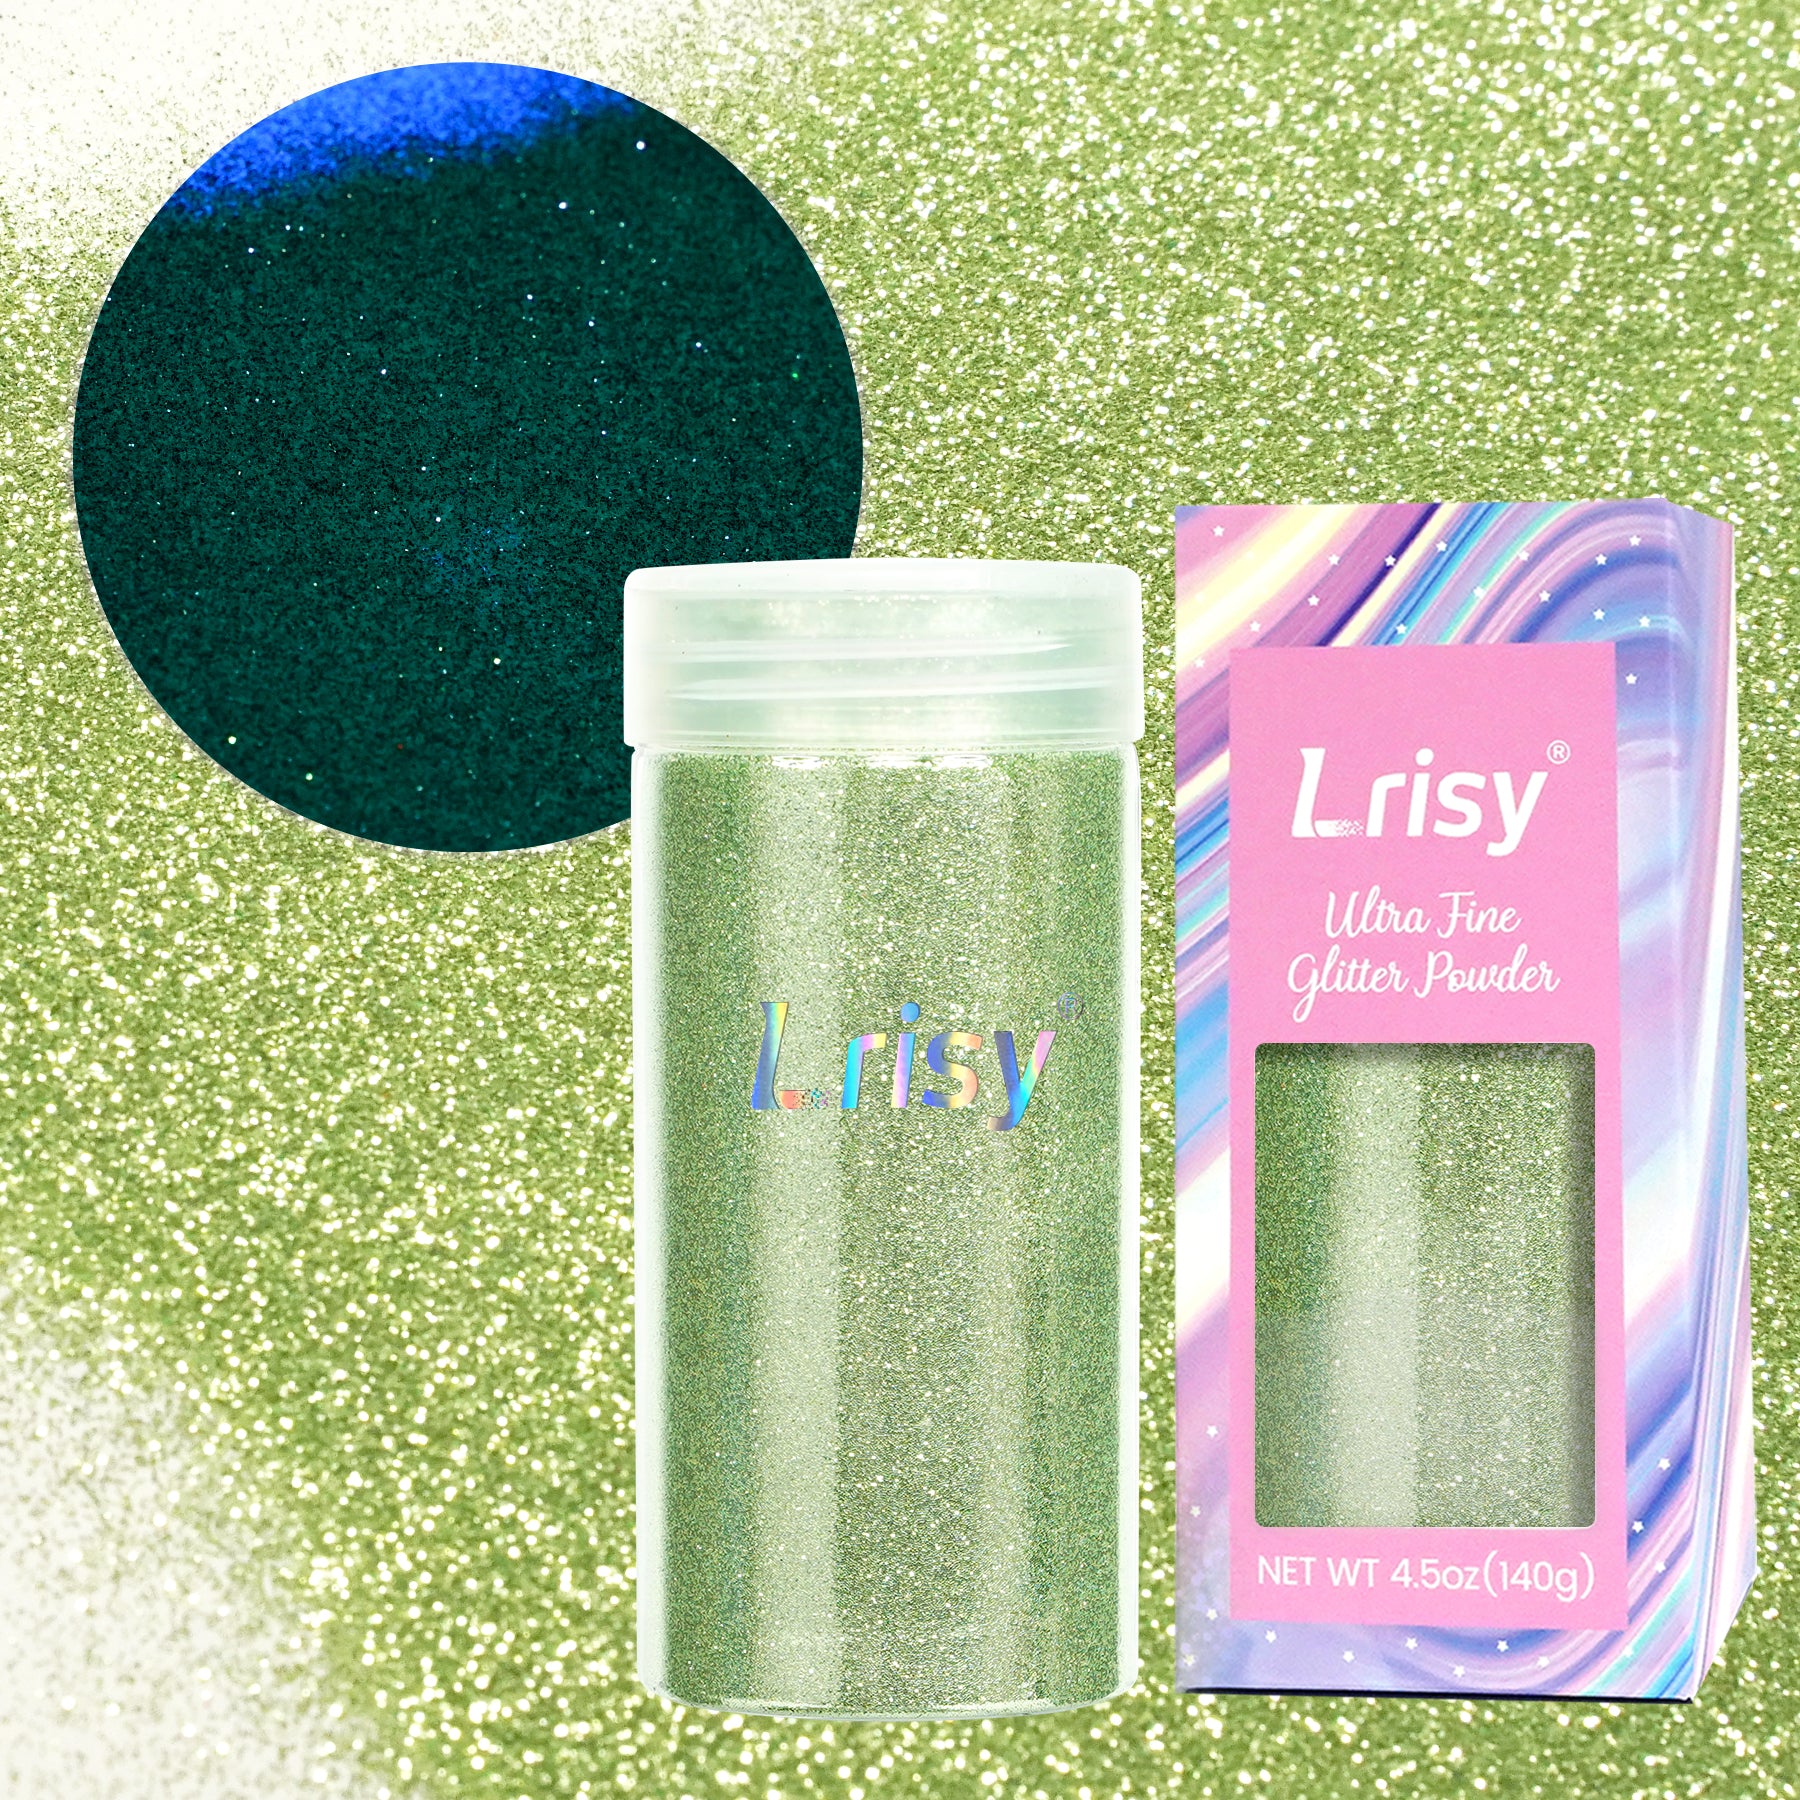 Lrisy Extra Fine Neon Punk Metallic Glitter Powder with Shaker Lid 140g/4.5oz (Punk Matcha Green)